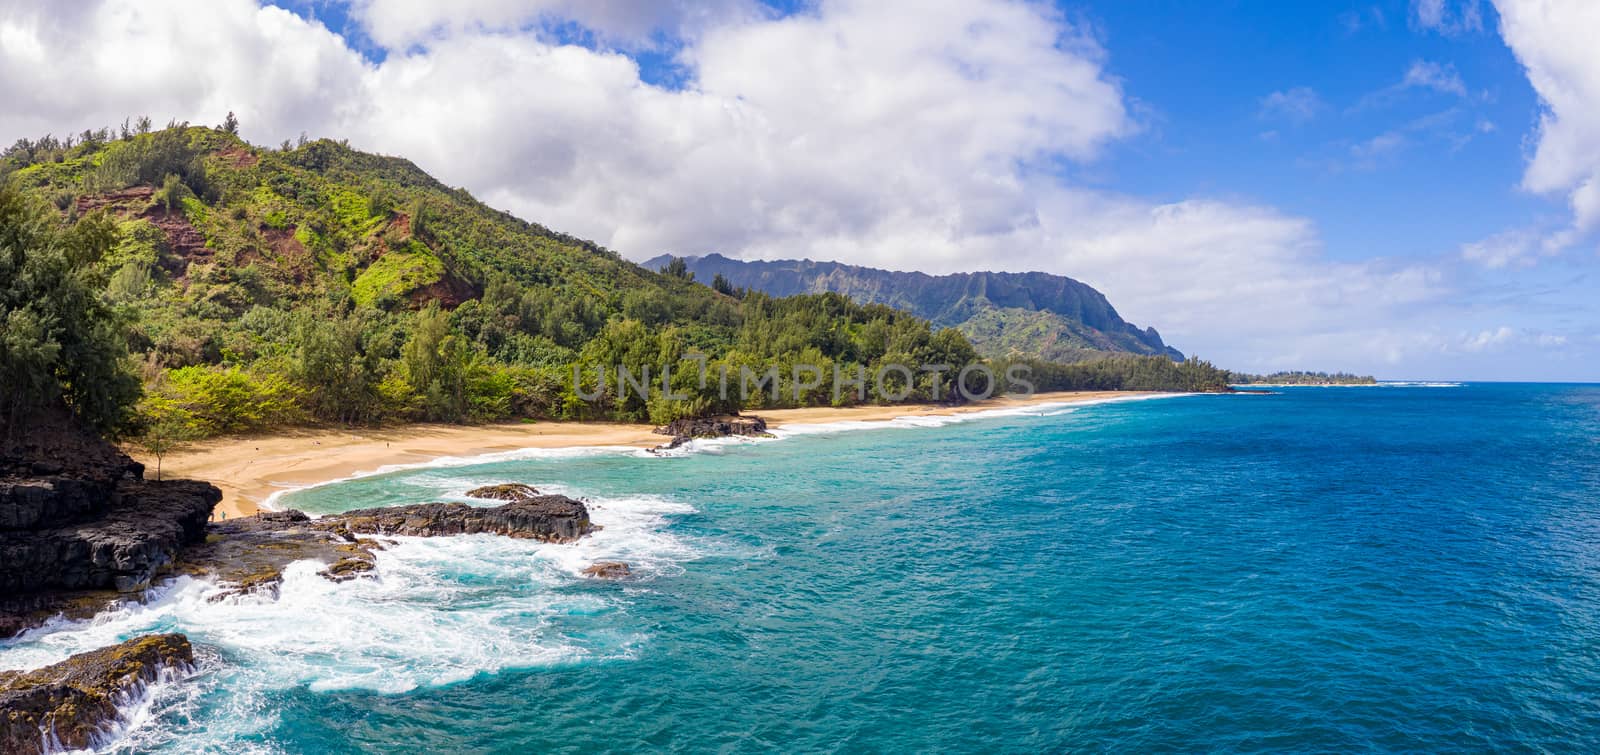 Aerial drone shot of Lumahai Beach on the north shore of Kauai in Hawaii by steheap